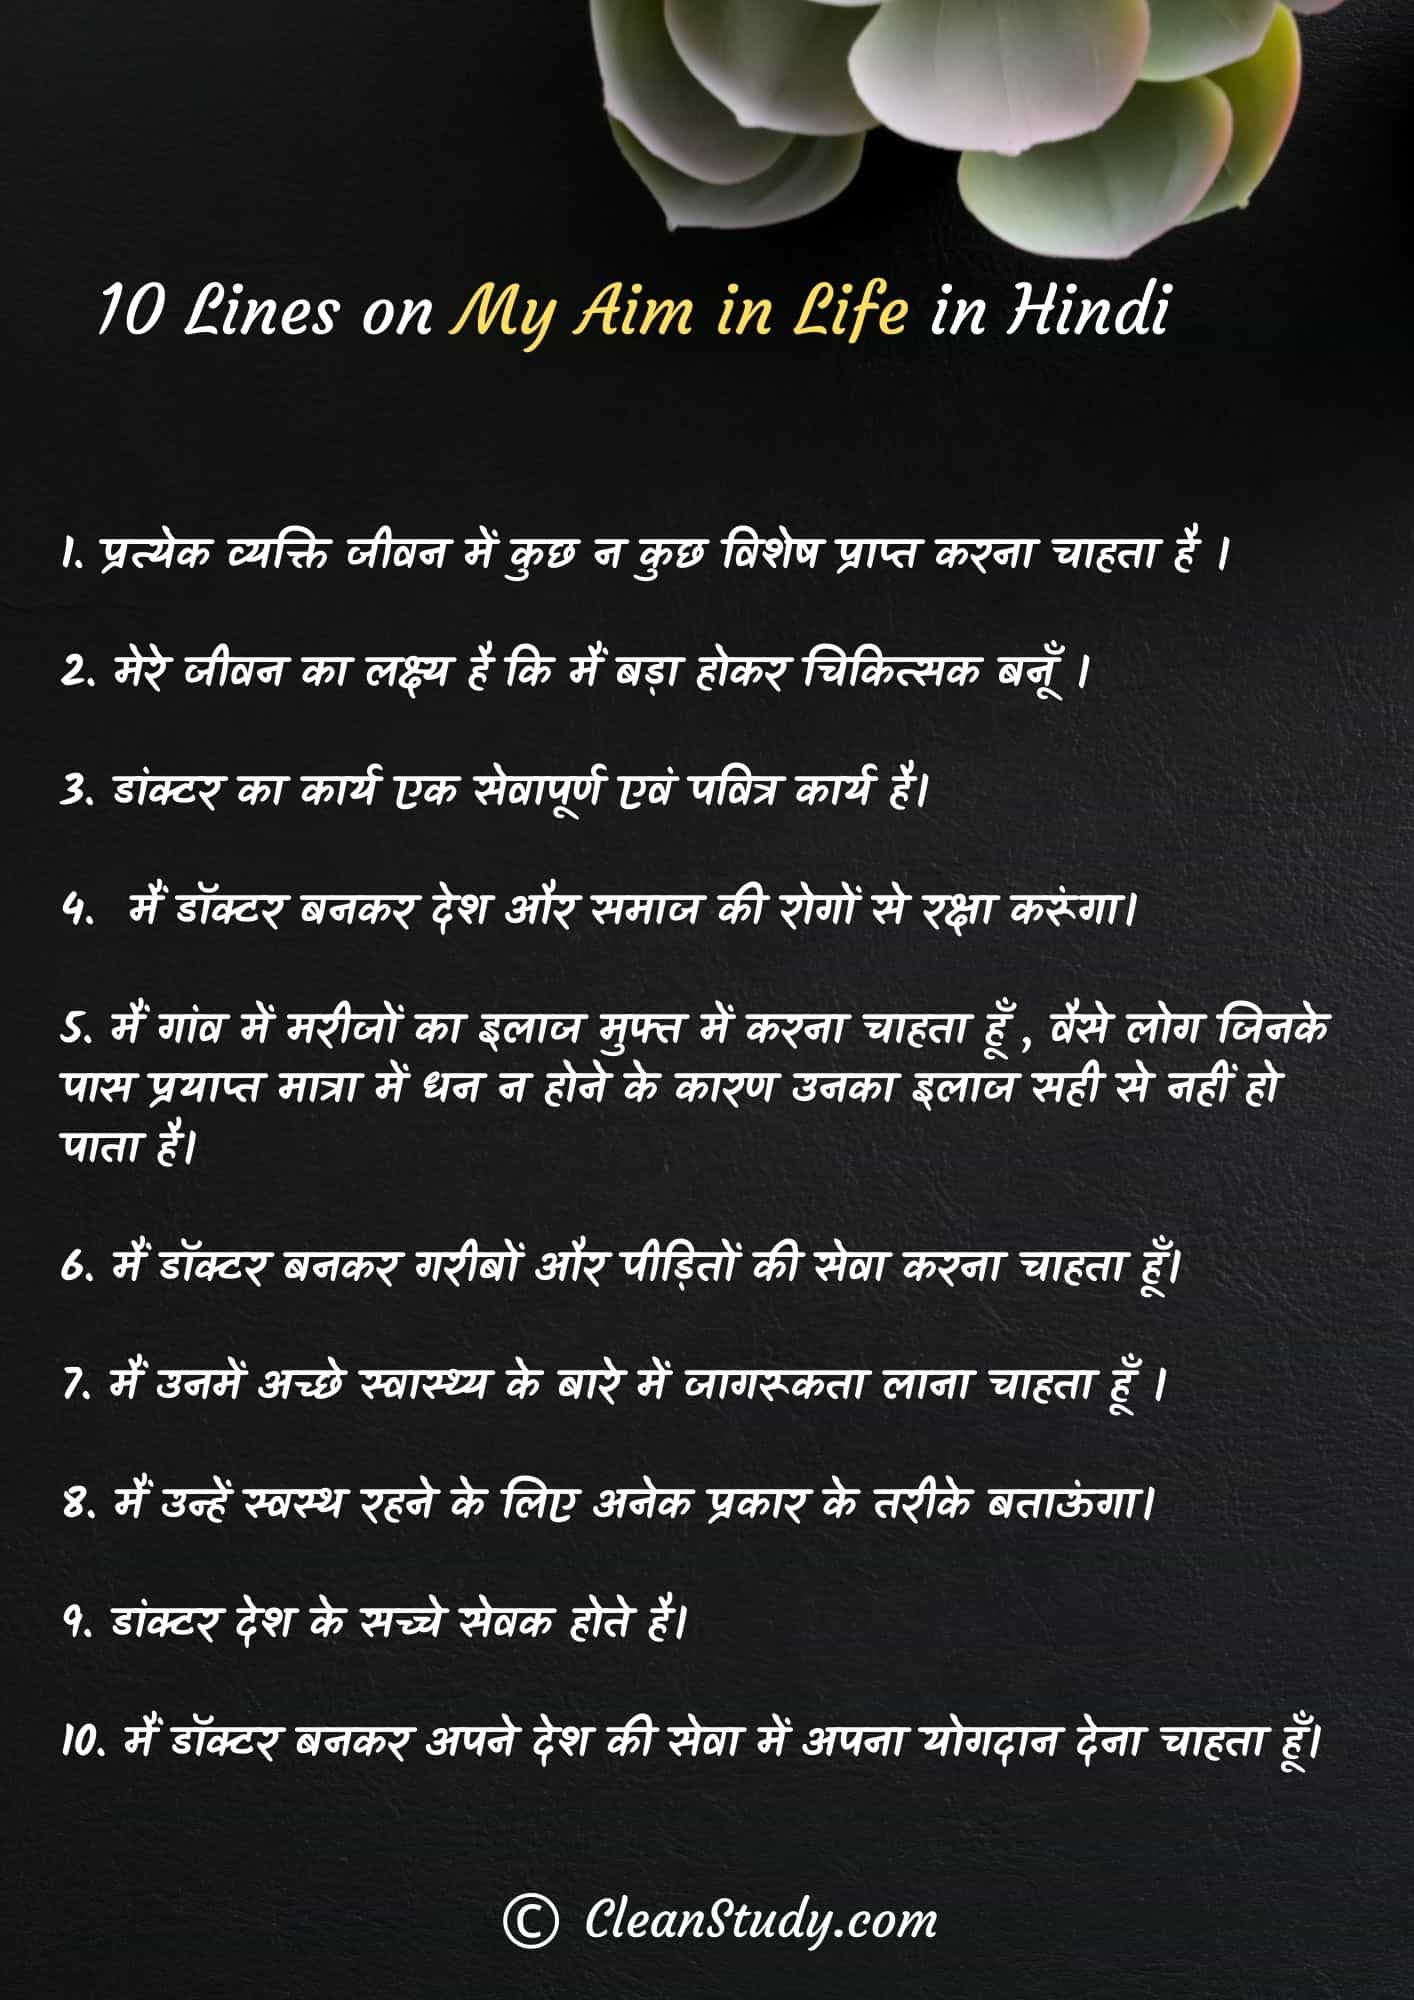 my aim in life in hindi short essay